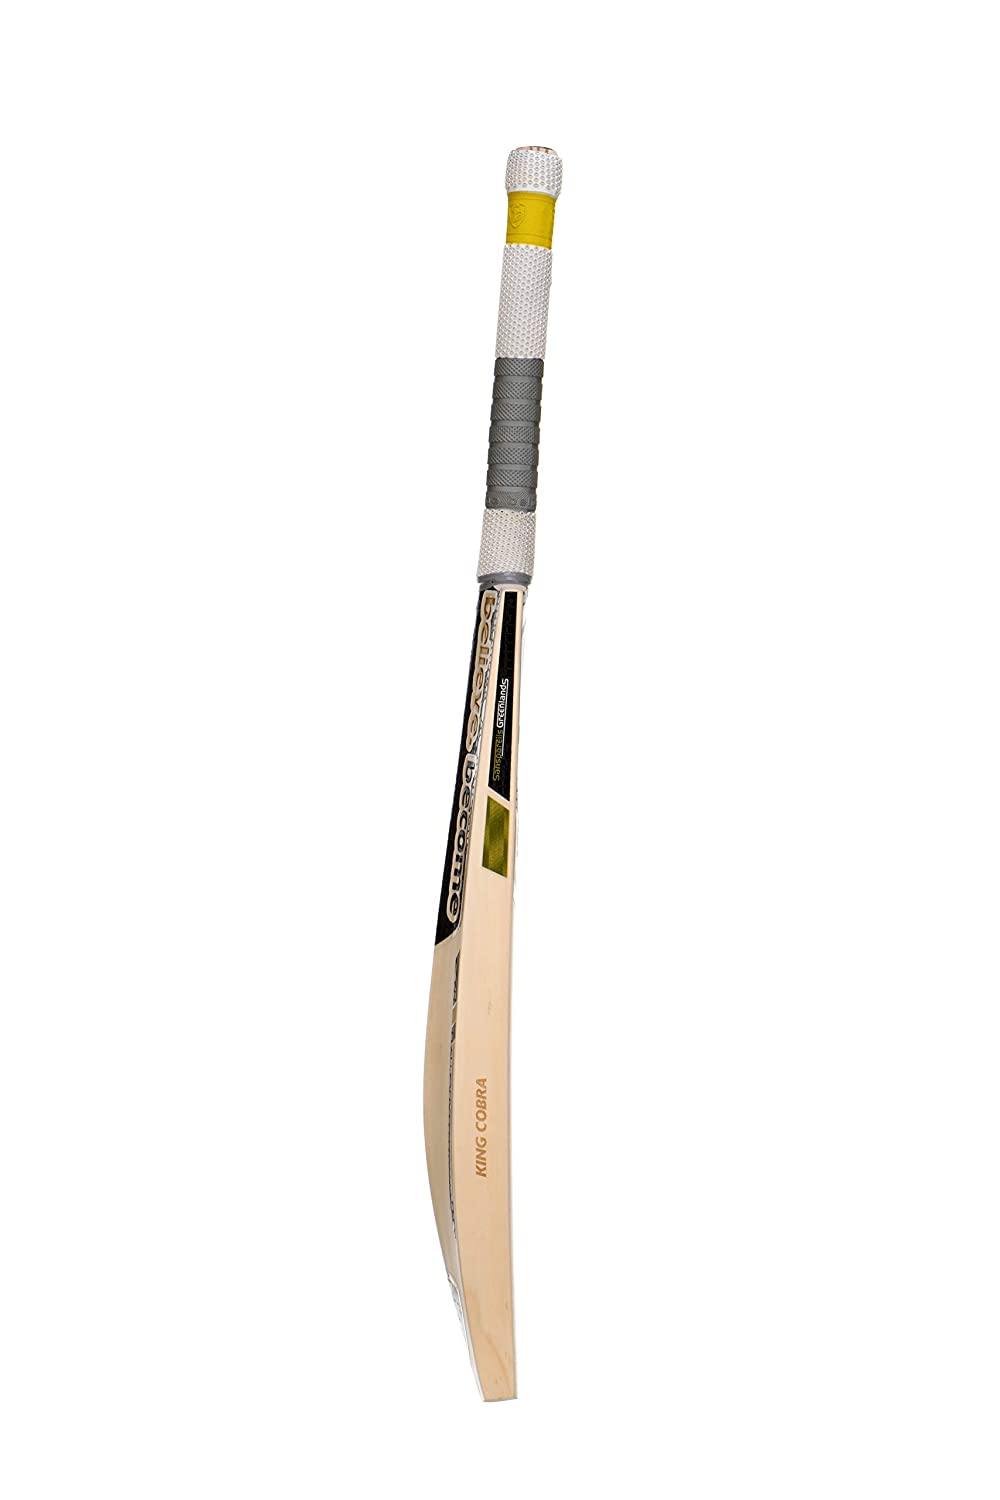 SG King Cobra English Willow Cricket Bat (Color May Vary) - Best Price online Prokicksports.com